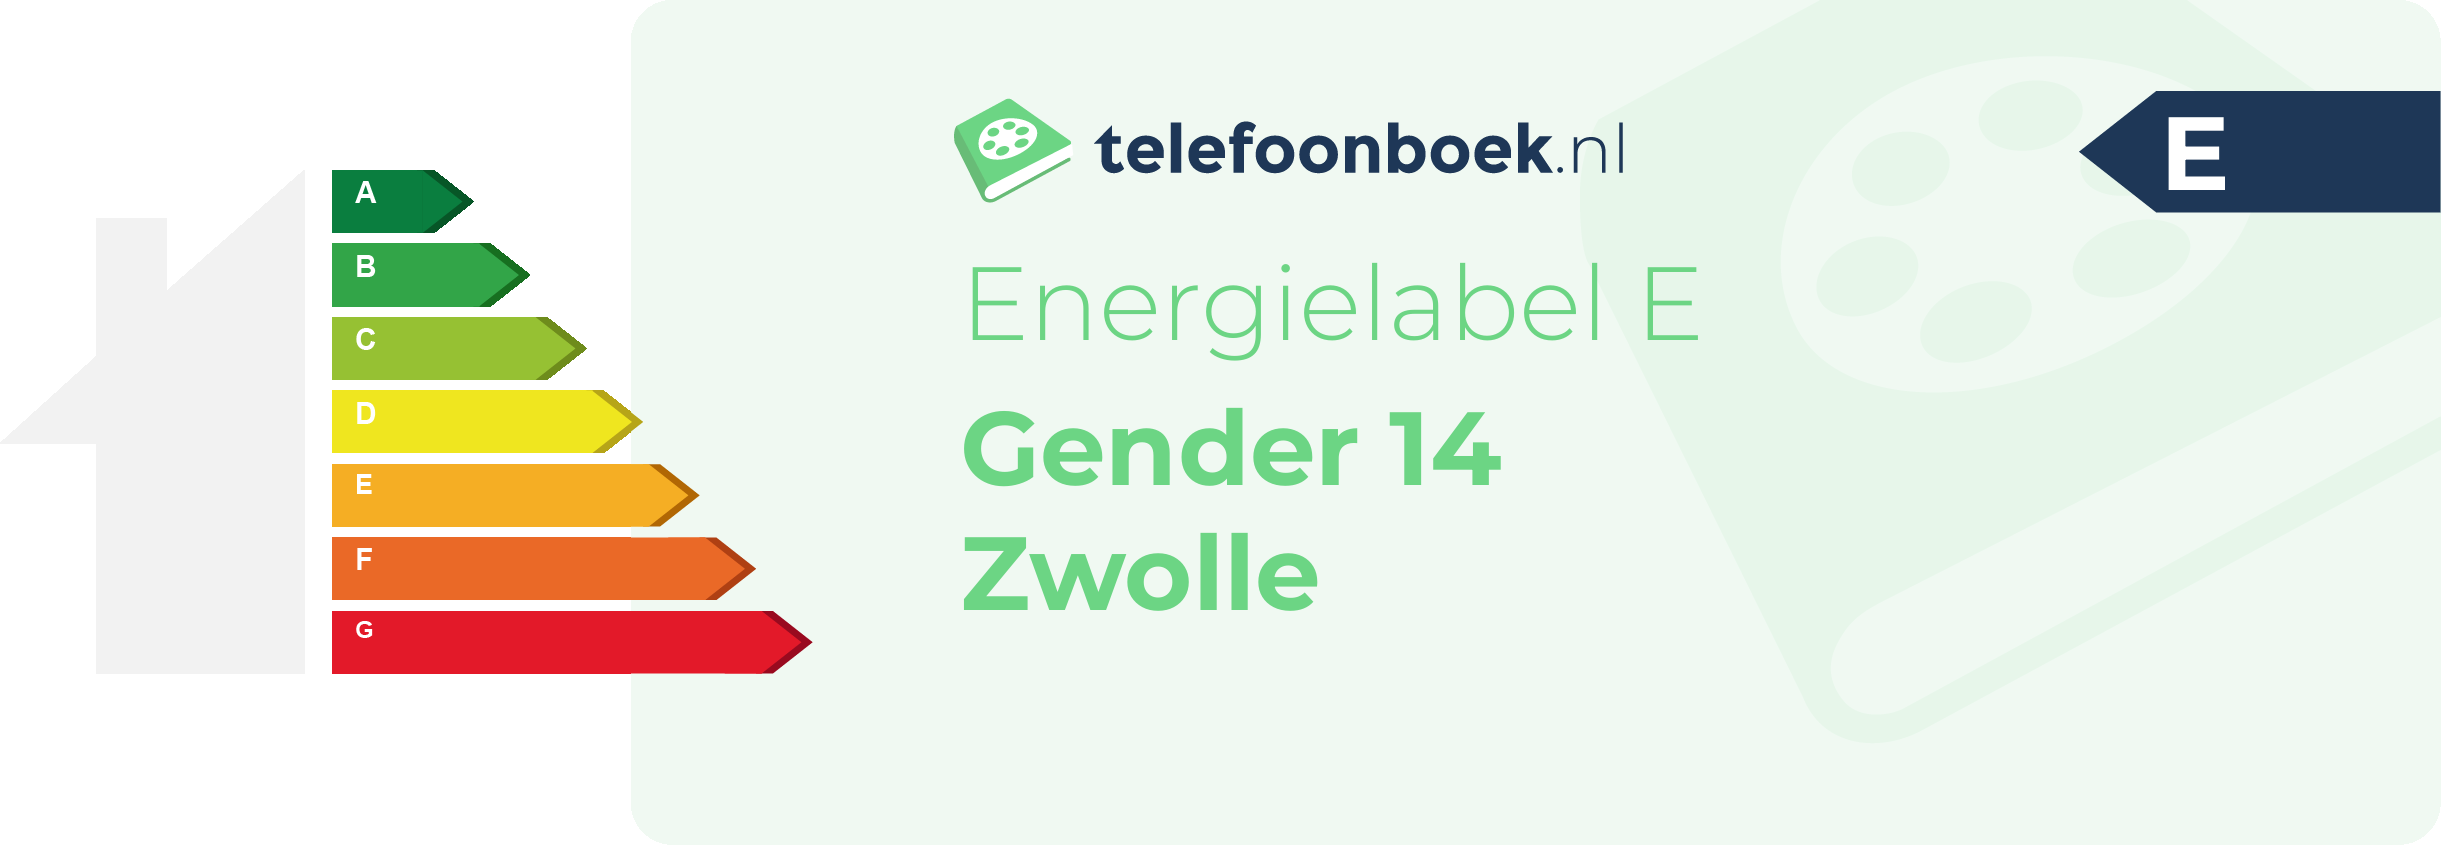 Energielabel Gender 14 Zwolle